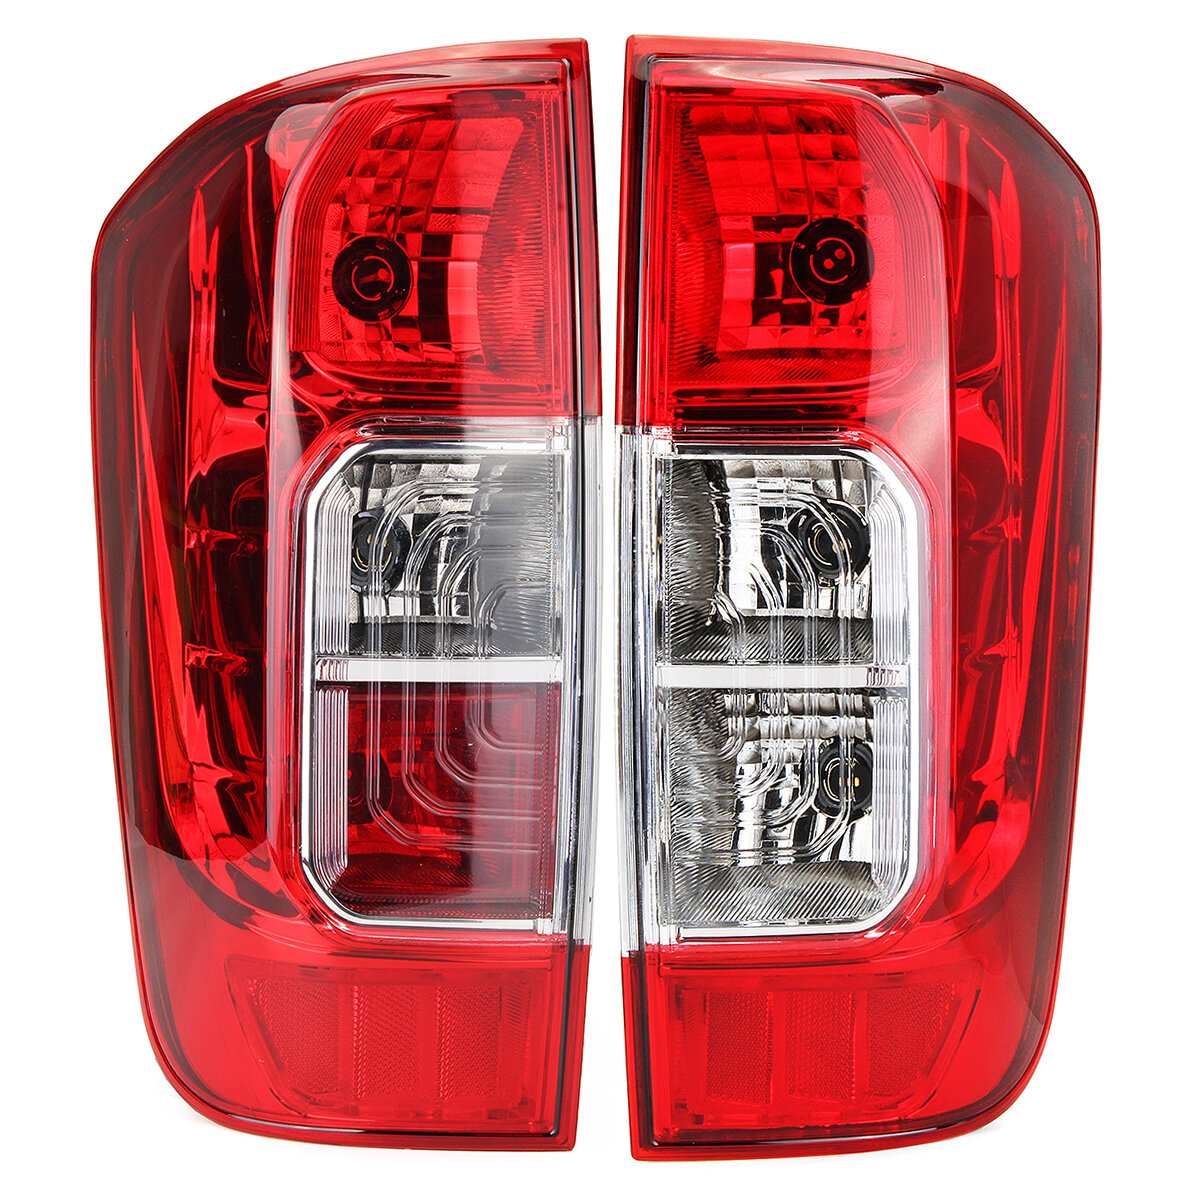 

Задний задний фонарь красного цвета без лампочки влево / вправо для Nissan Navara NP300 D23 2015-2019